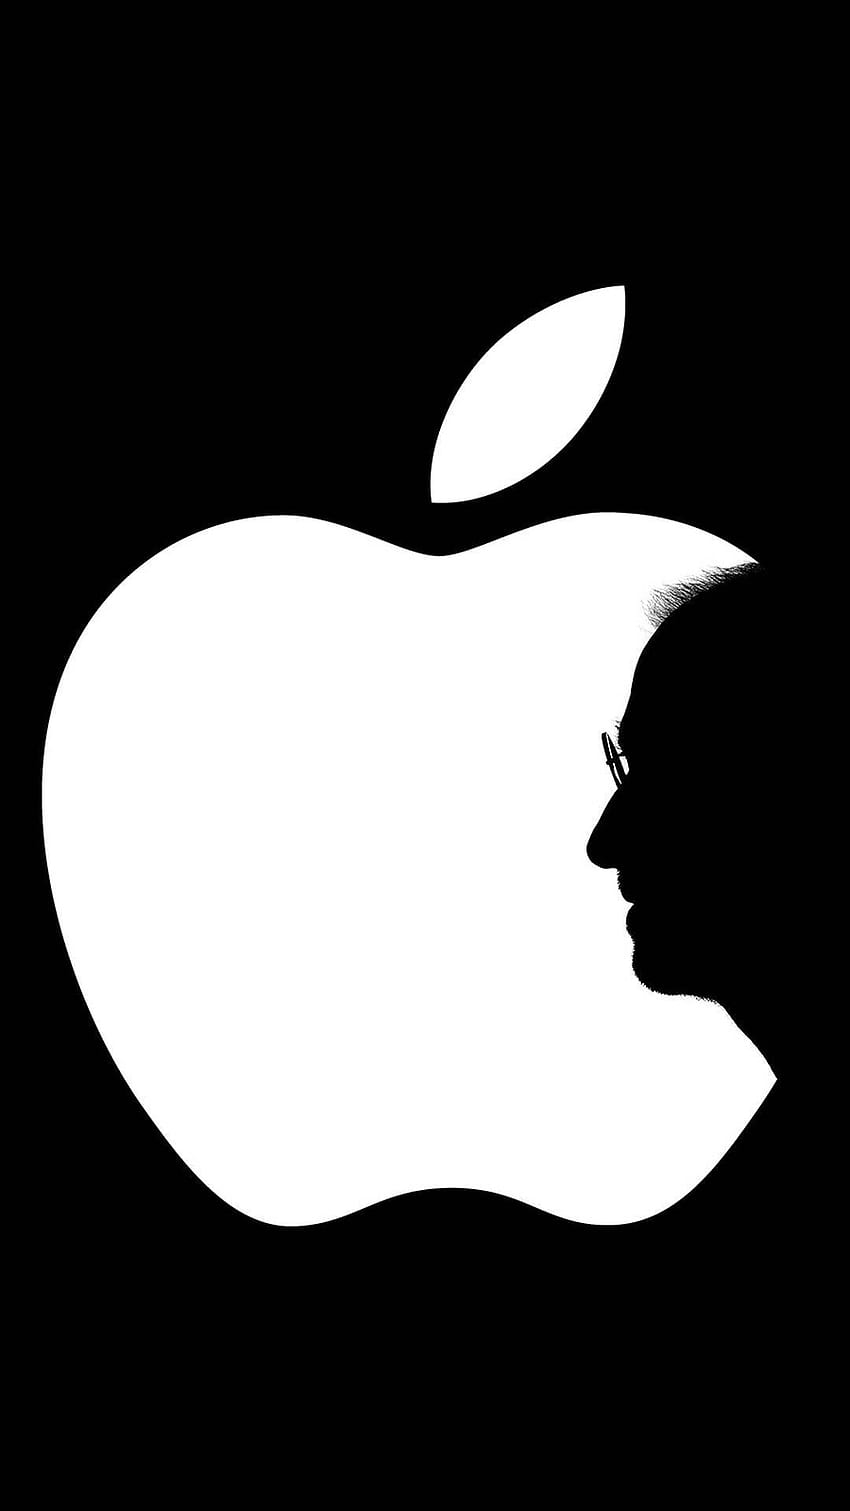 Penghargaan Steve Jobs untuk iPhone 6 dan iPhone 6, steve berlin wallpaper ponsel HD